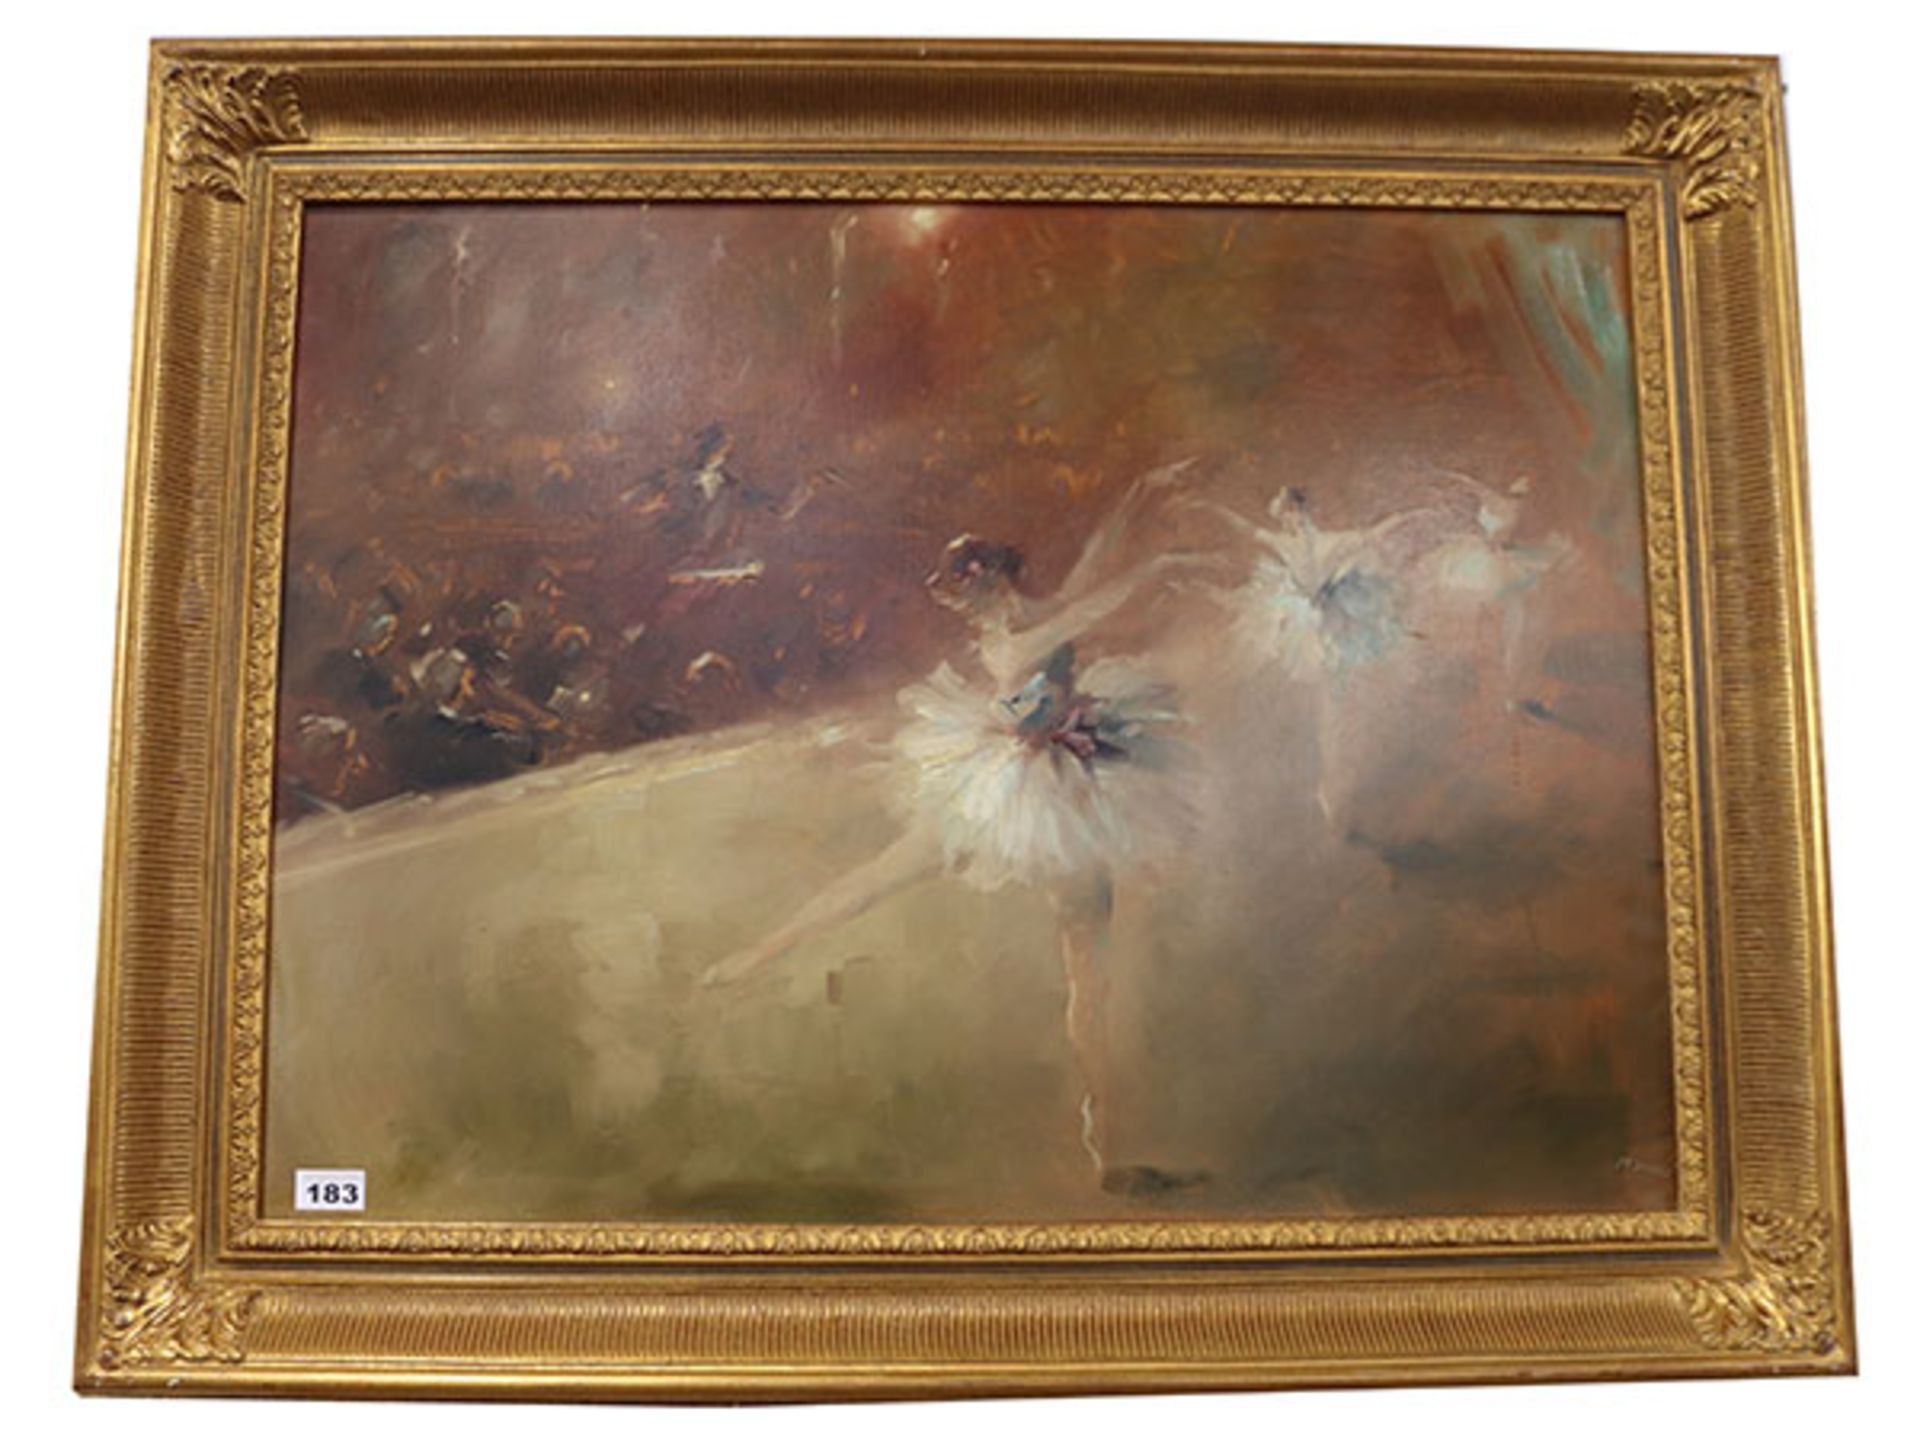 Gemälde ÖL/LW 'Ballerinen', signiert Moreno, gerahmt, incl. Rahmen 78 cm x 98,5 cm